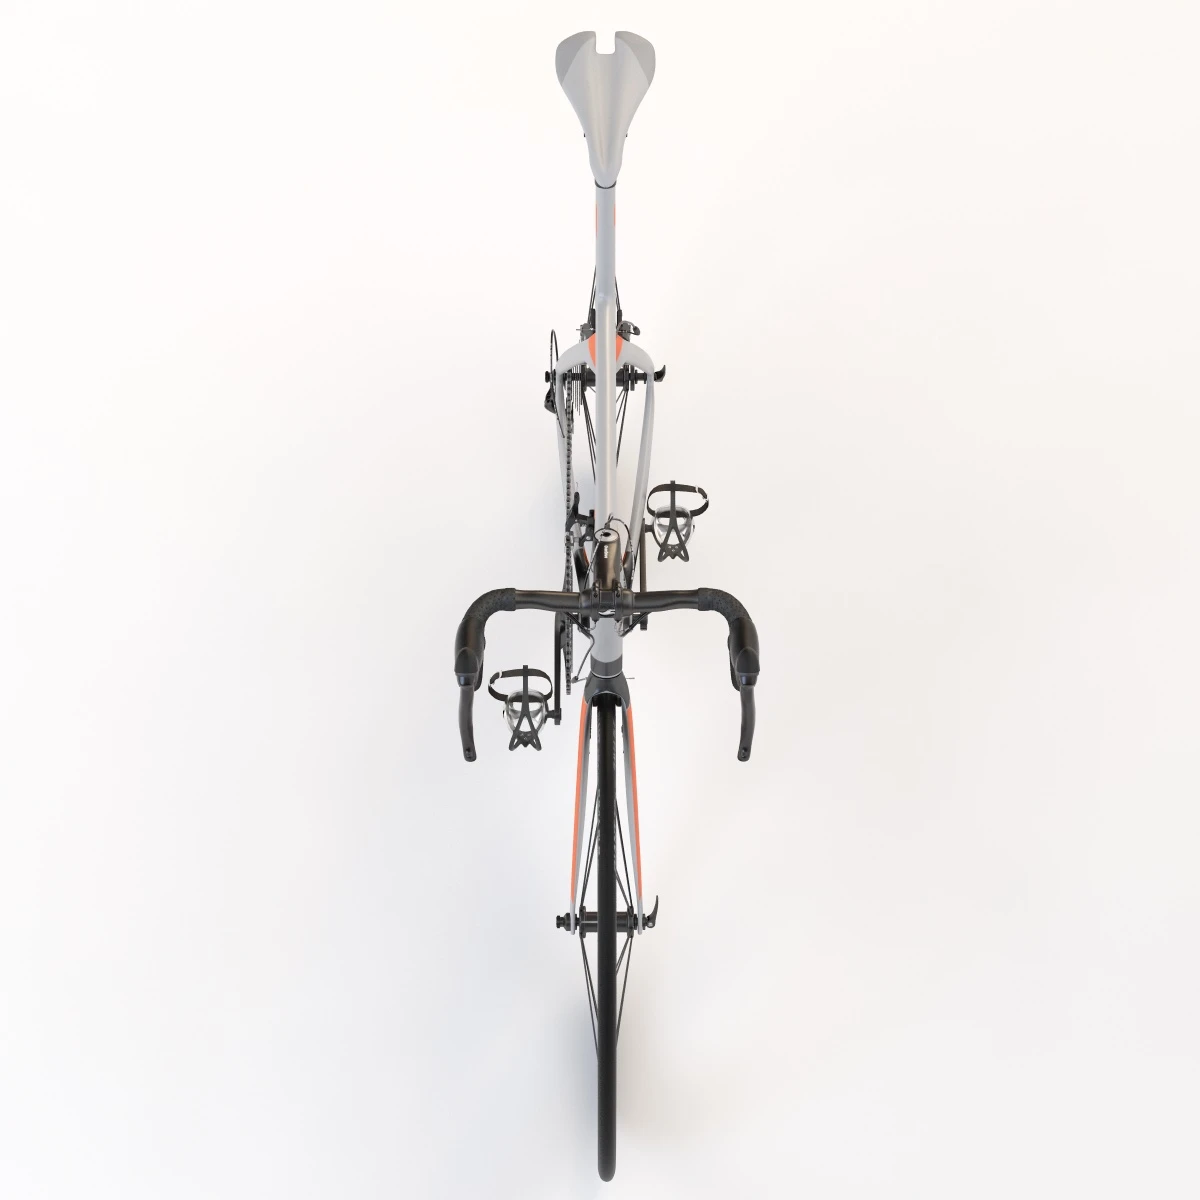 Giant Propel Advanced Sl-2 Orange Grey Black Lightweight Sprinter Bicycle 3D Model_07